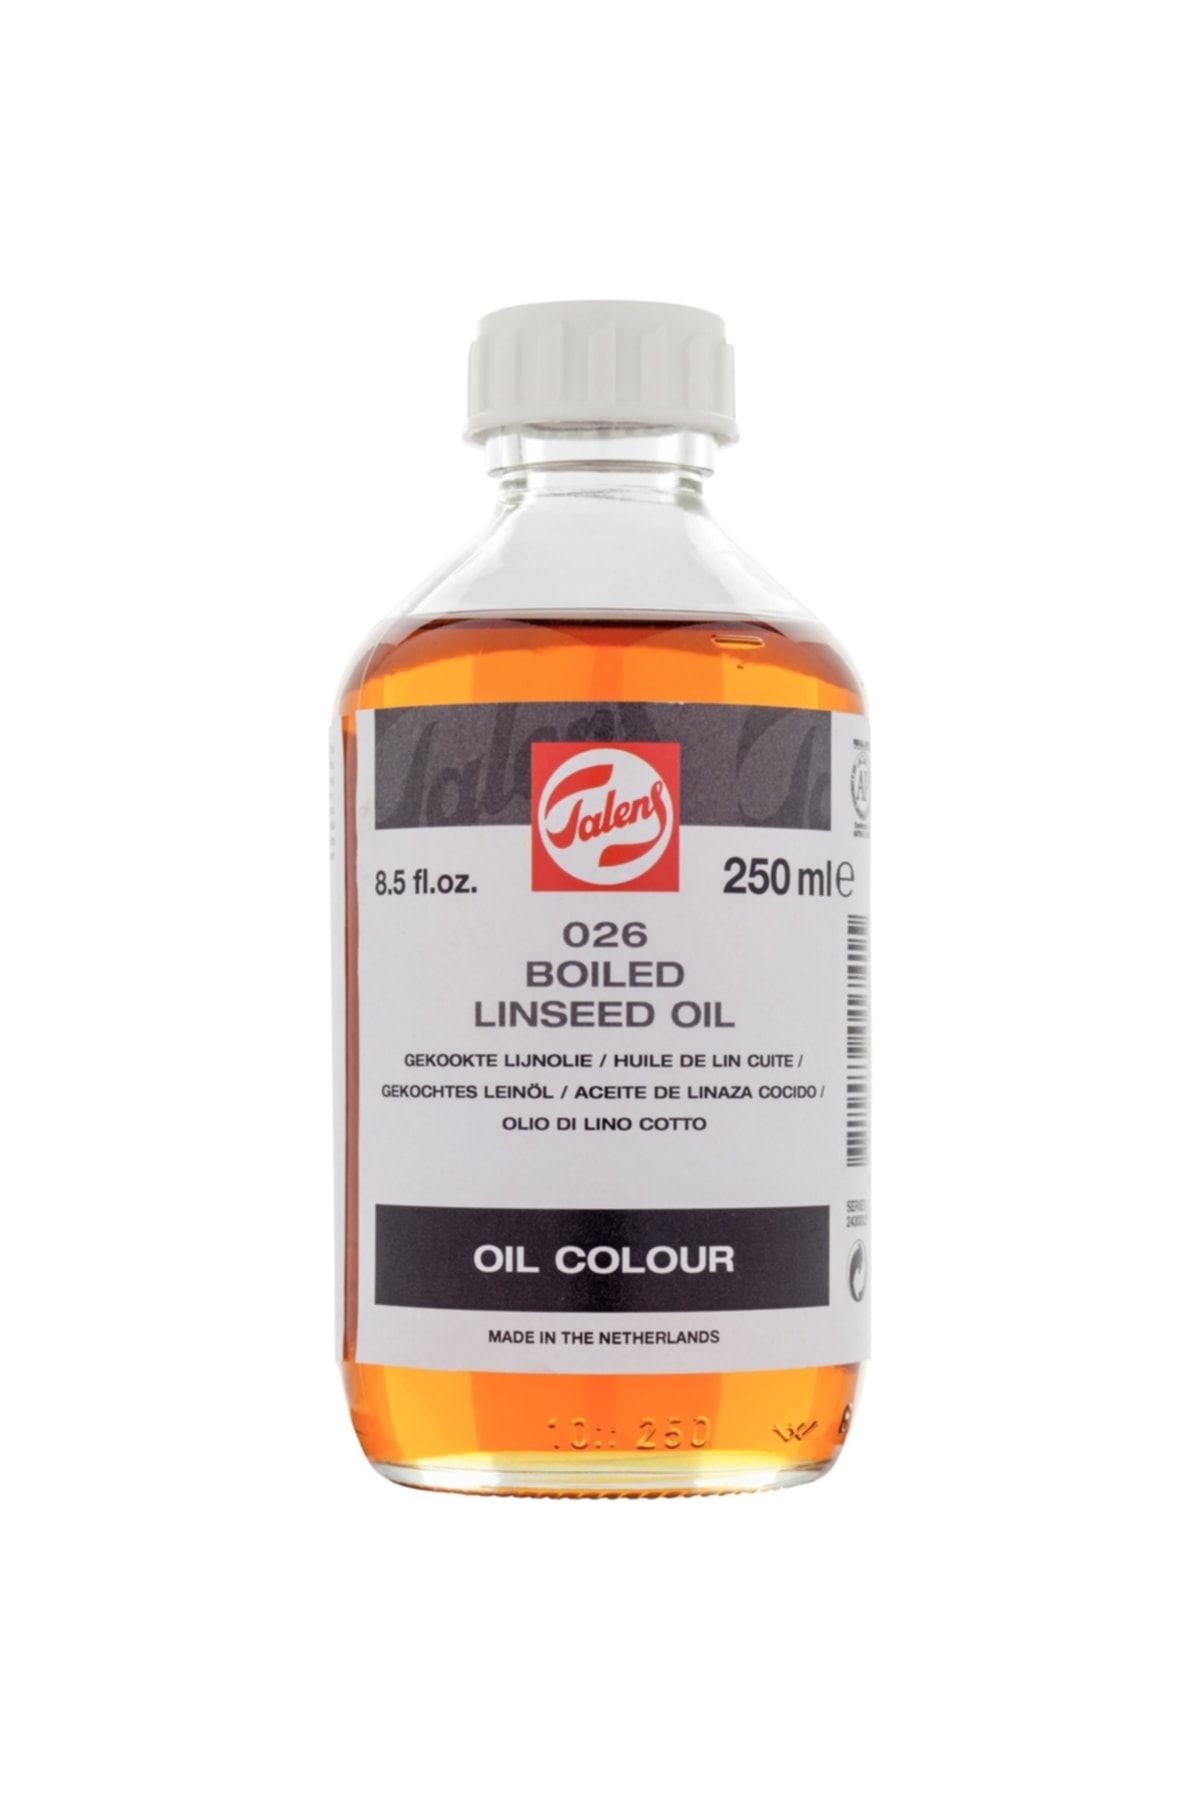 Talens Linseed Oil Boiled 026 250ml (kaynatılmış Keten Yağı)